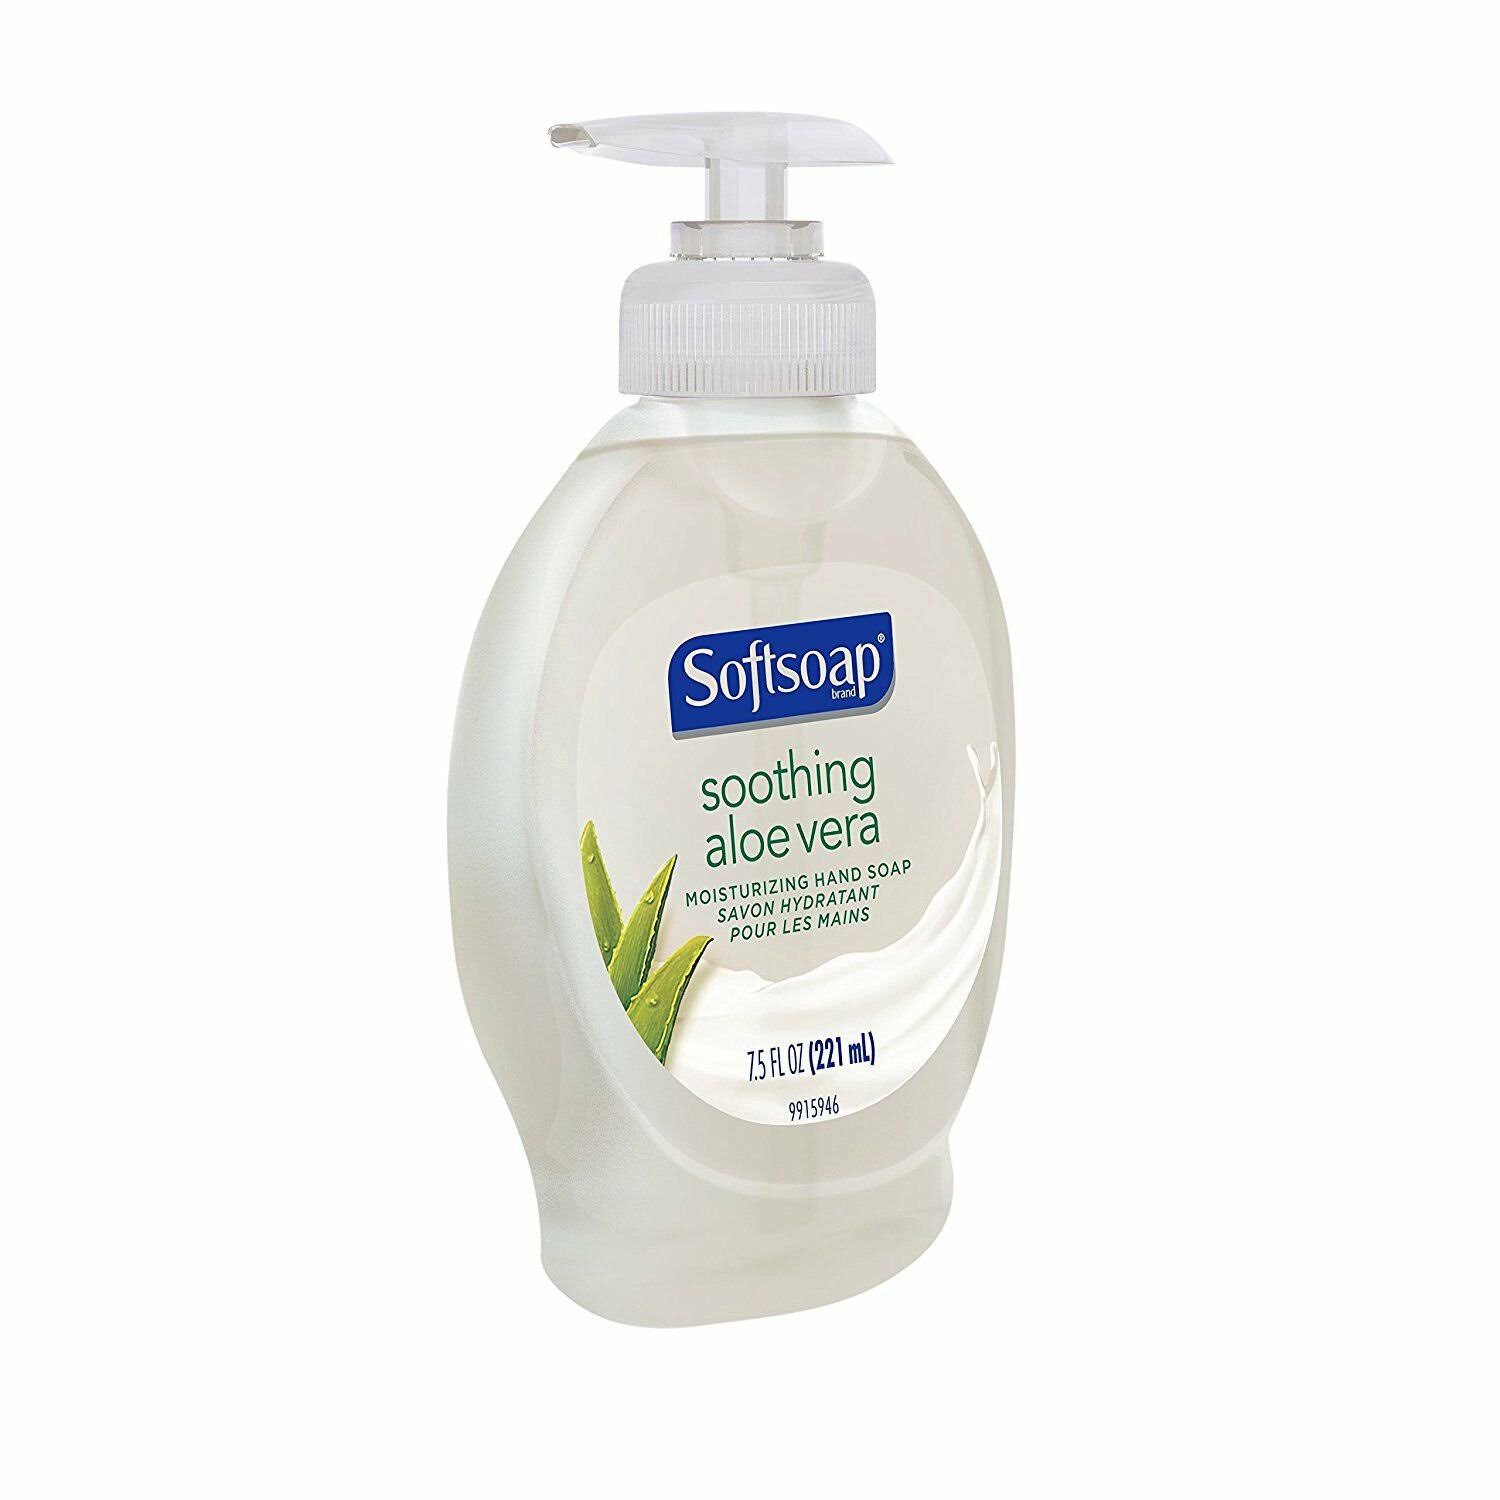 Softsoap Moisturizing Hand Soap - Soothing Aloe Vera, 7.5oz